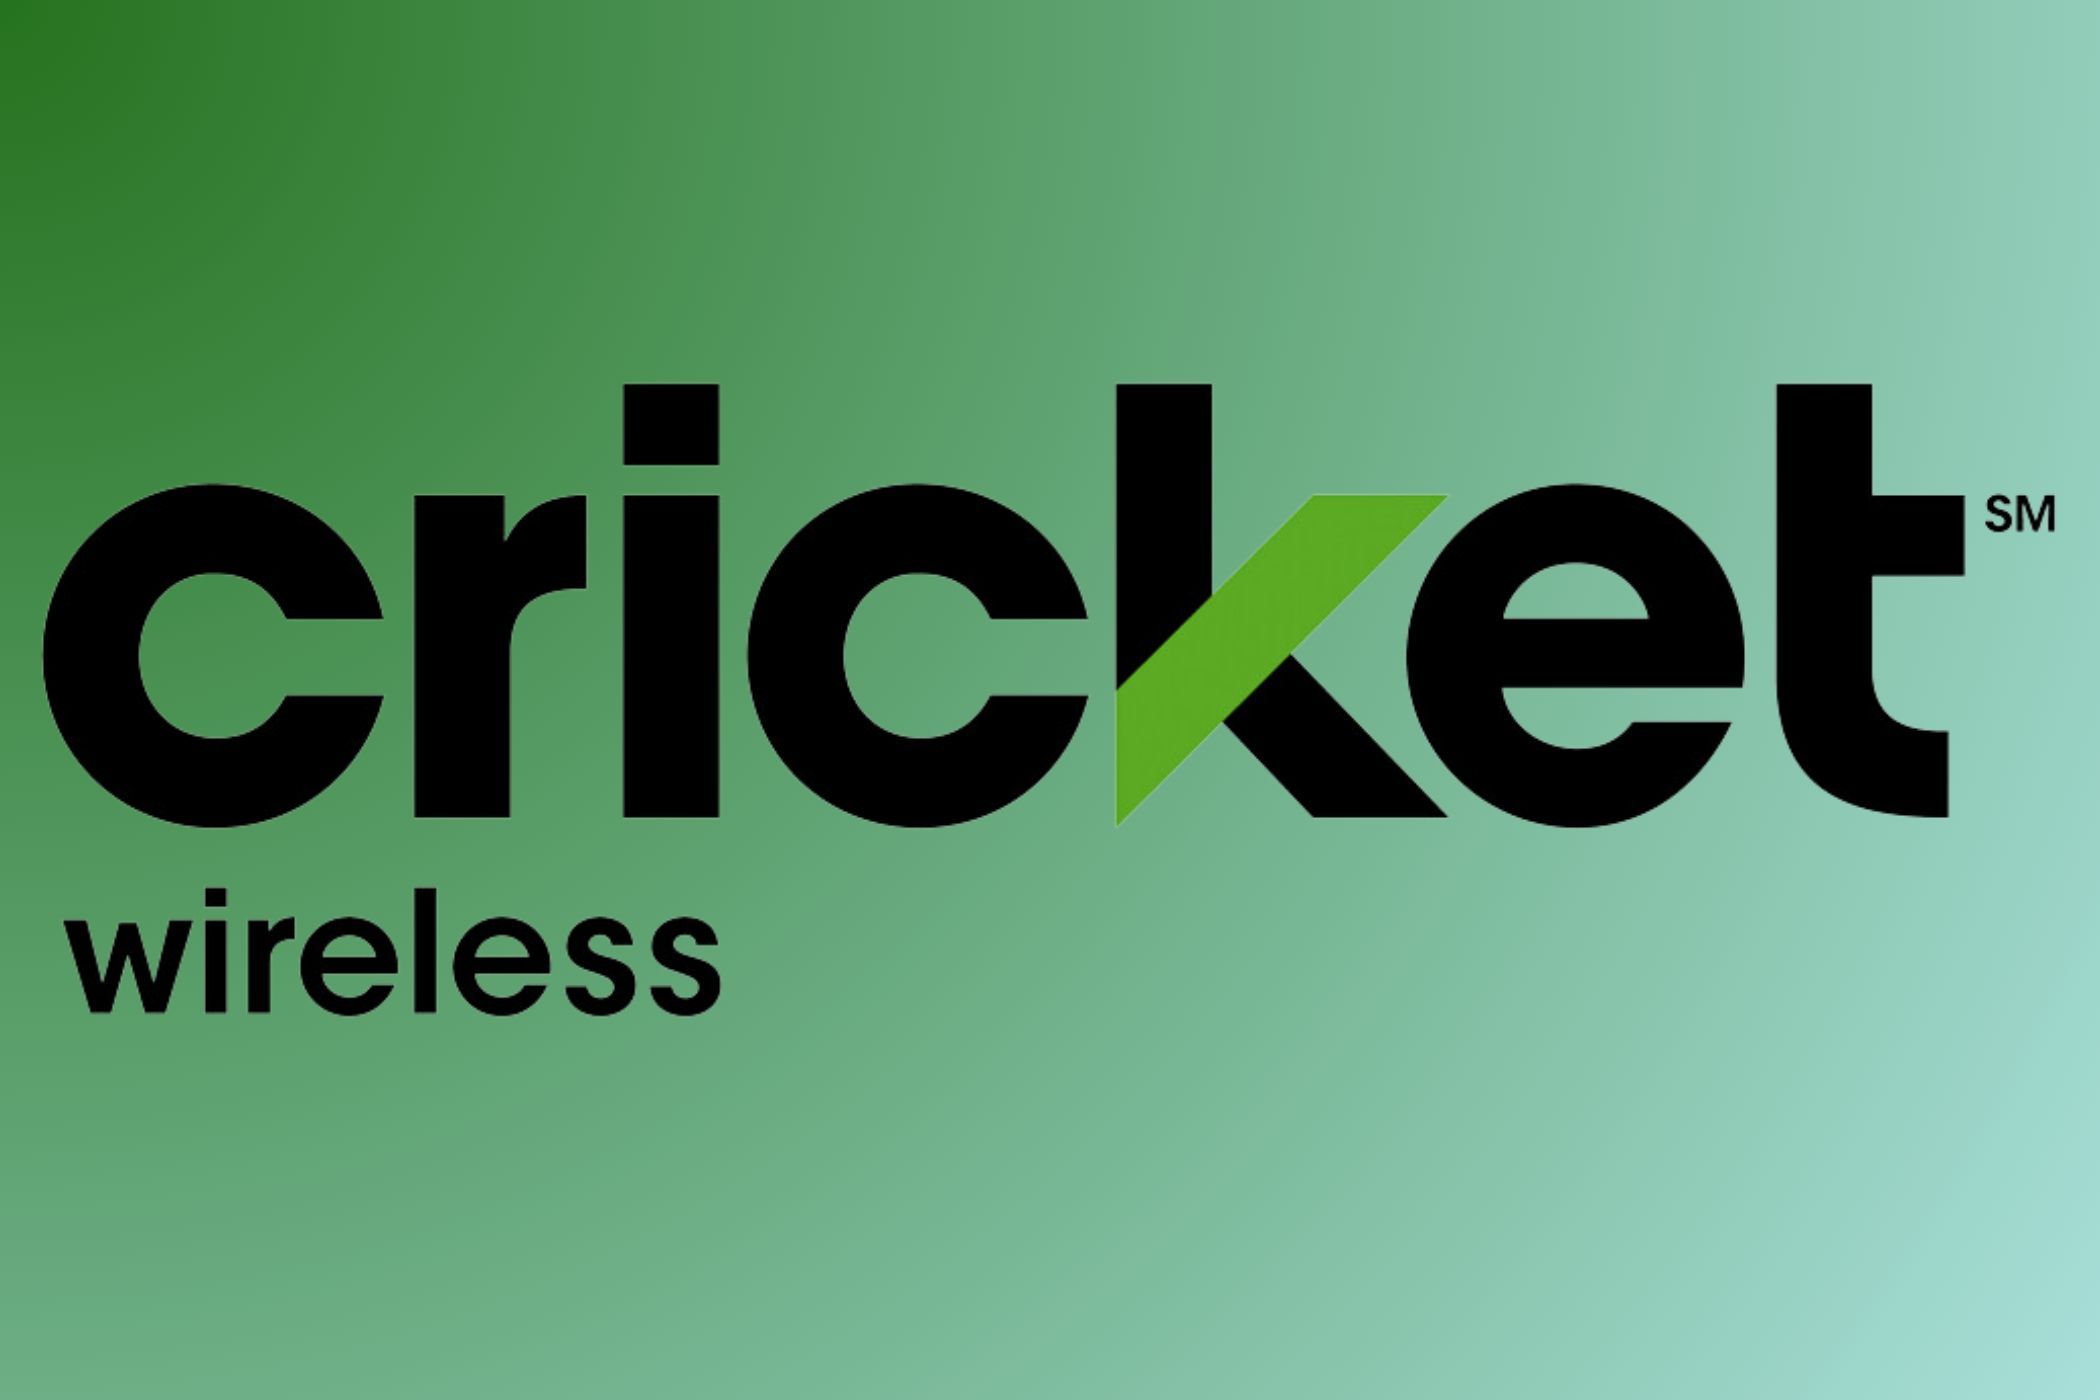 cricket wireless logo on a green background